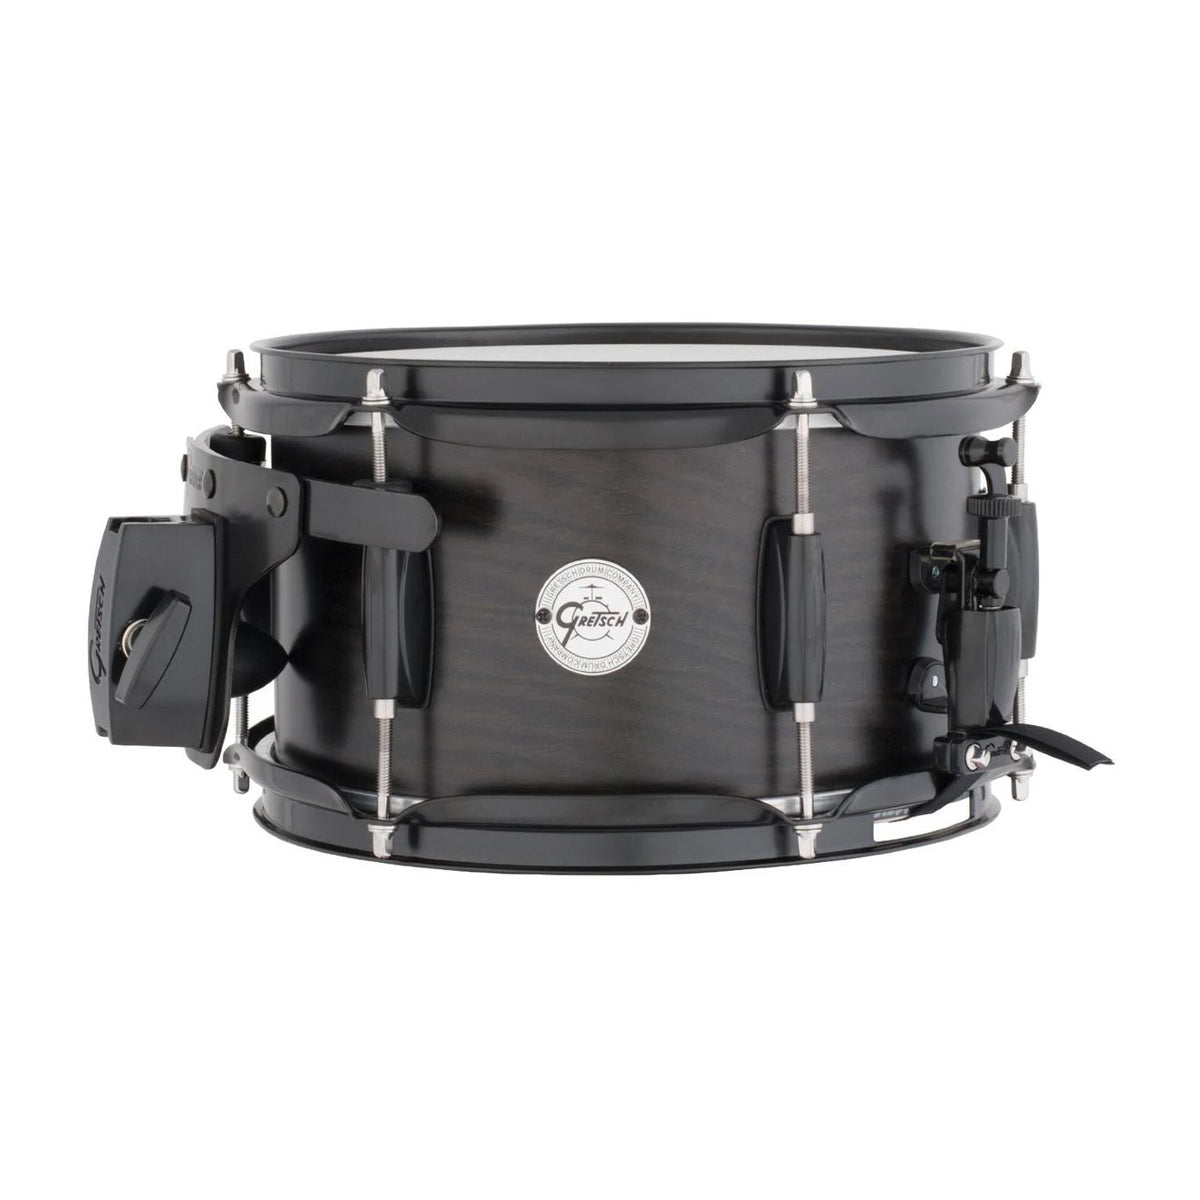 Gretsch "Full Range" 10"x6" Ash Side Snare Drum